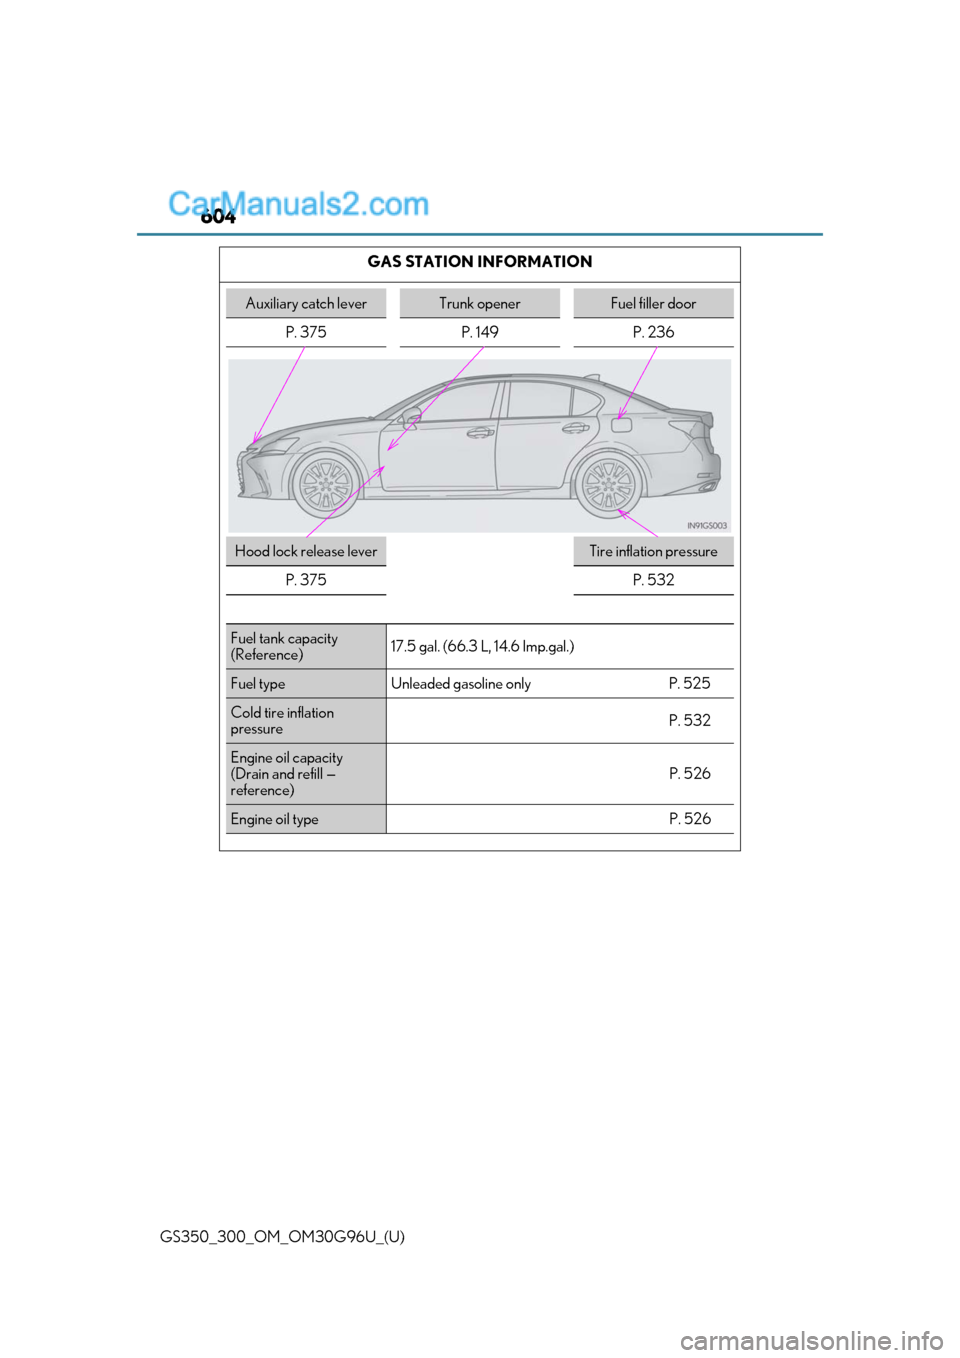 Lexus GS300 2019 User Guide 604
GS350_300_OM_OM30G96U_(U)GAS STATION INFORMATION
Auxiliary catch leverTrunk openerFuel filler door
P. 375 P. 149 P. 236
Hood lock release leverTire inflation pressure
P. 375
P. 532
Fuel tank capac